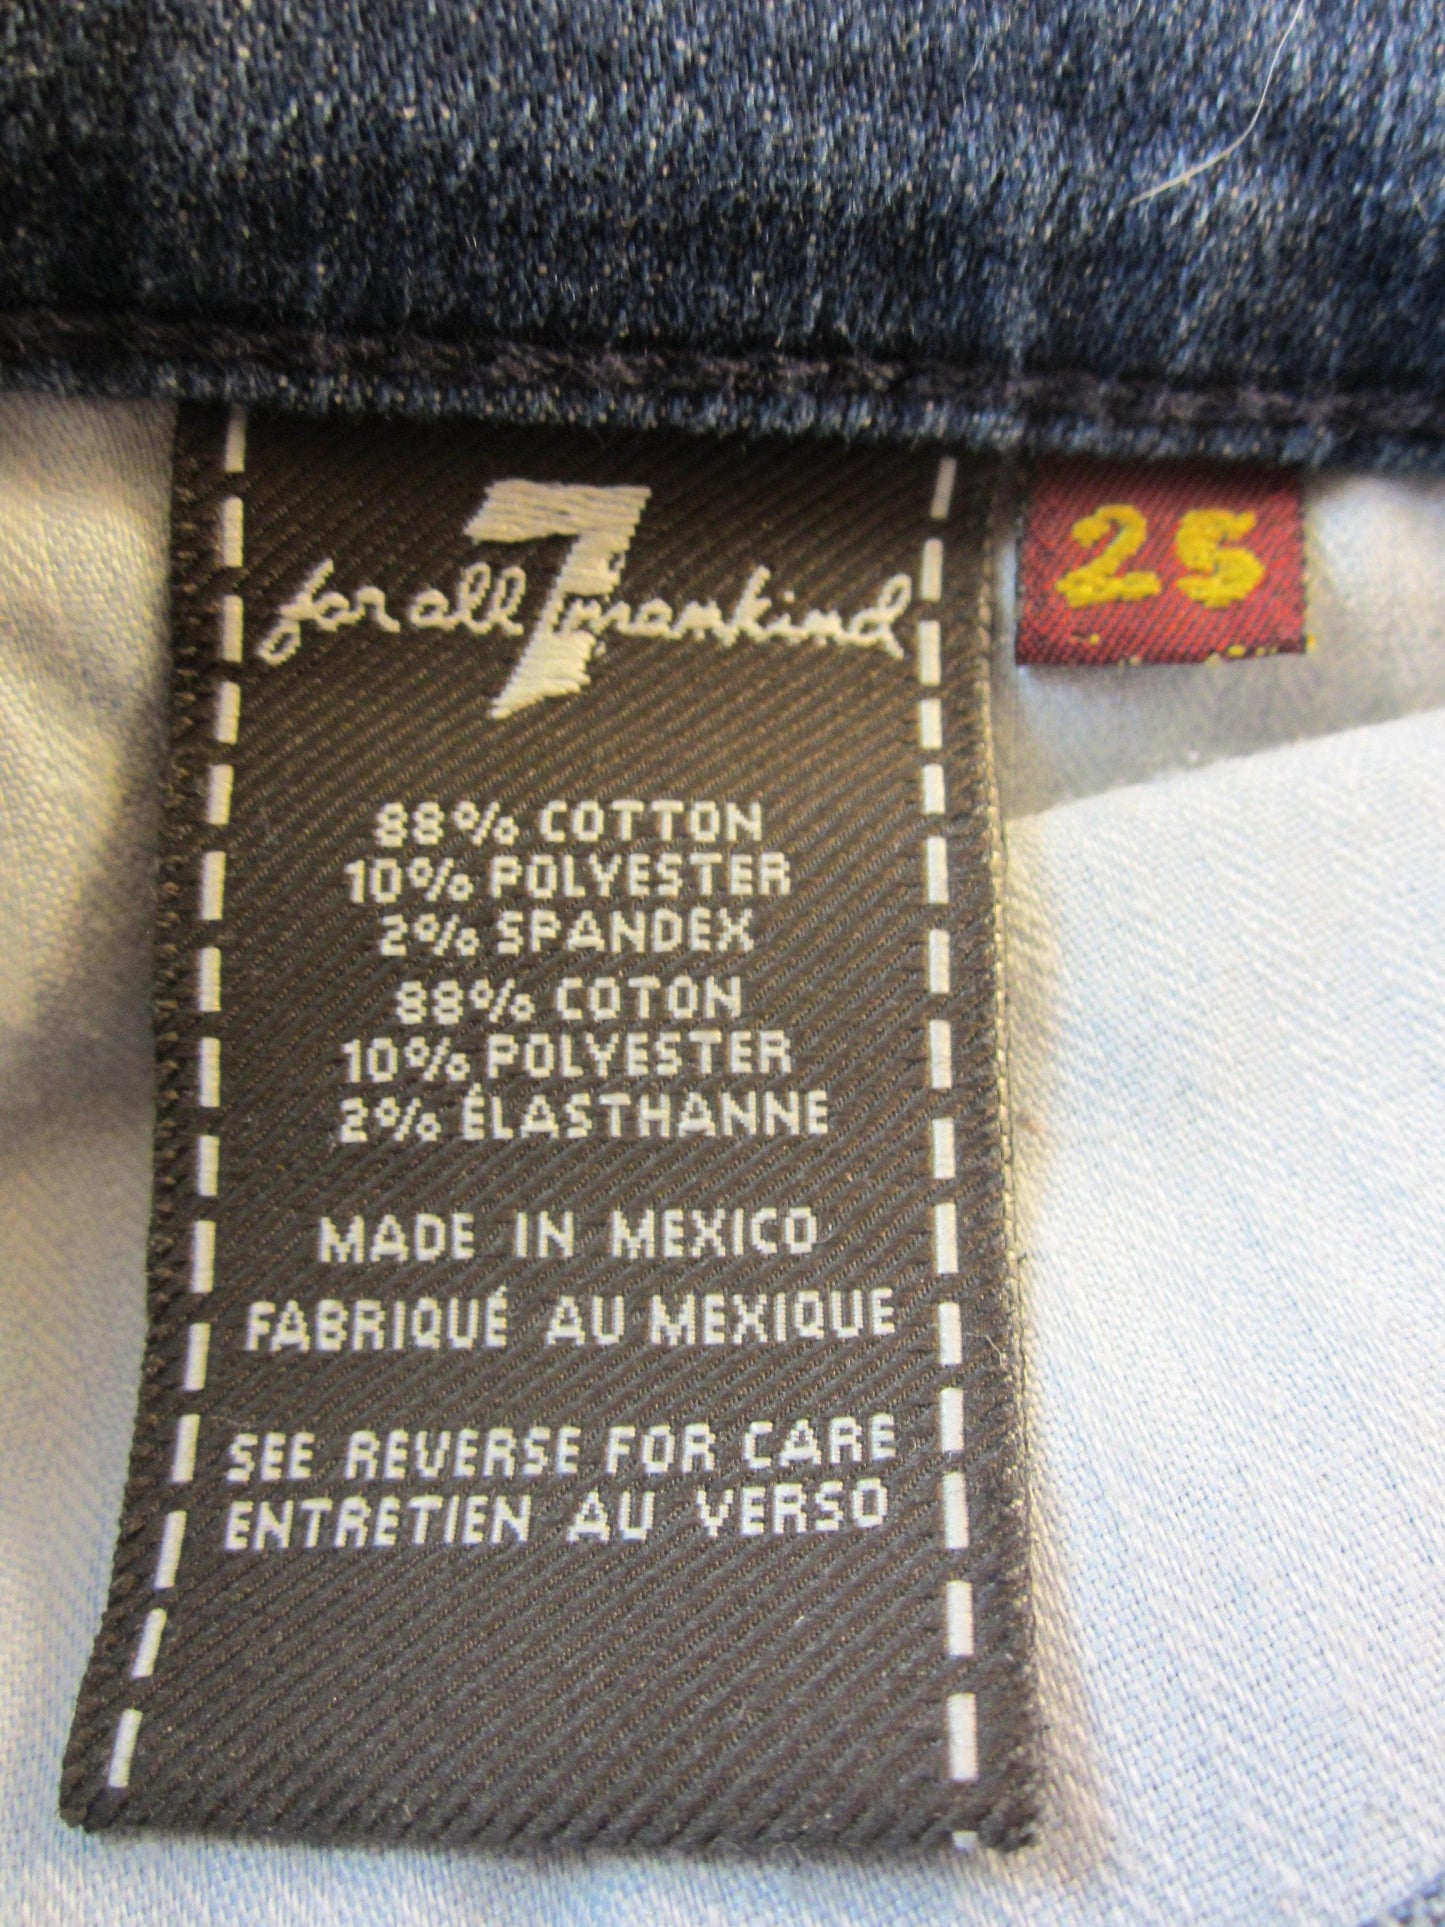 7 For All Mankind 90's Denim Blue Jeans Size 25 SKU 000102